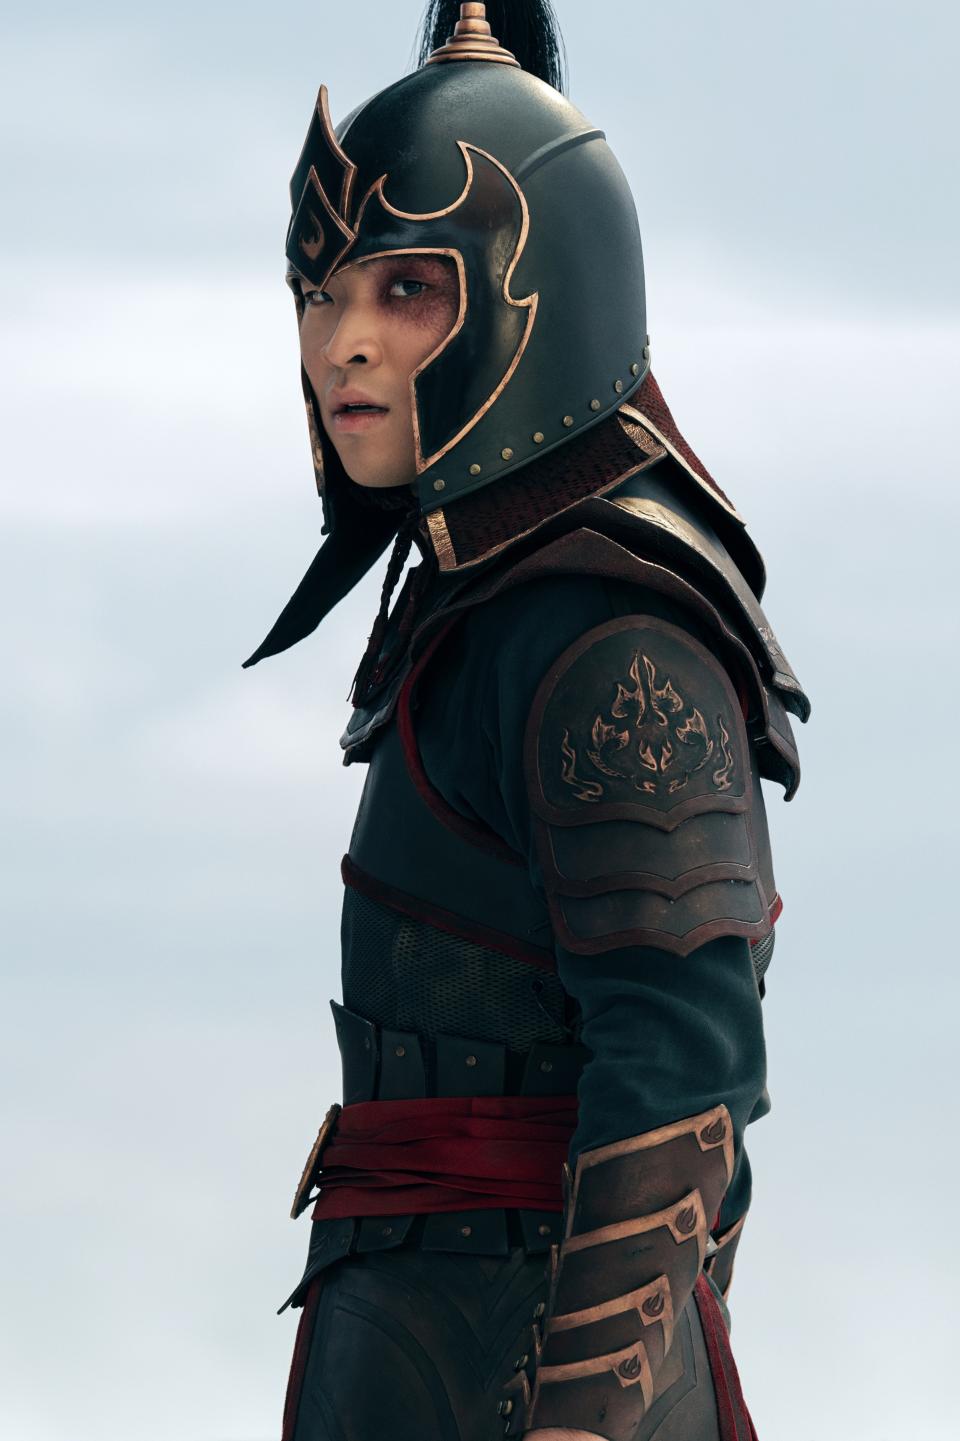 Dallas Liu as Prince Zuko in episode 101 of Avatar: The Last Airbender.